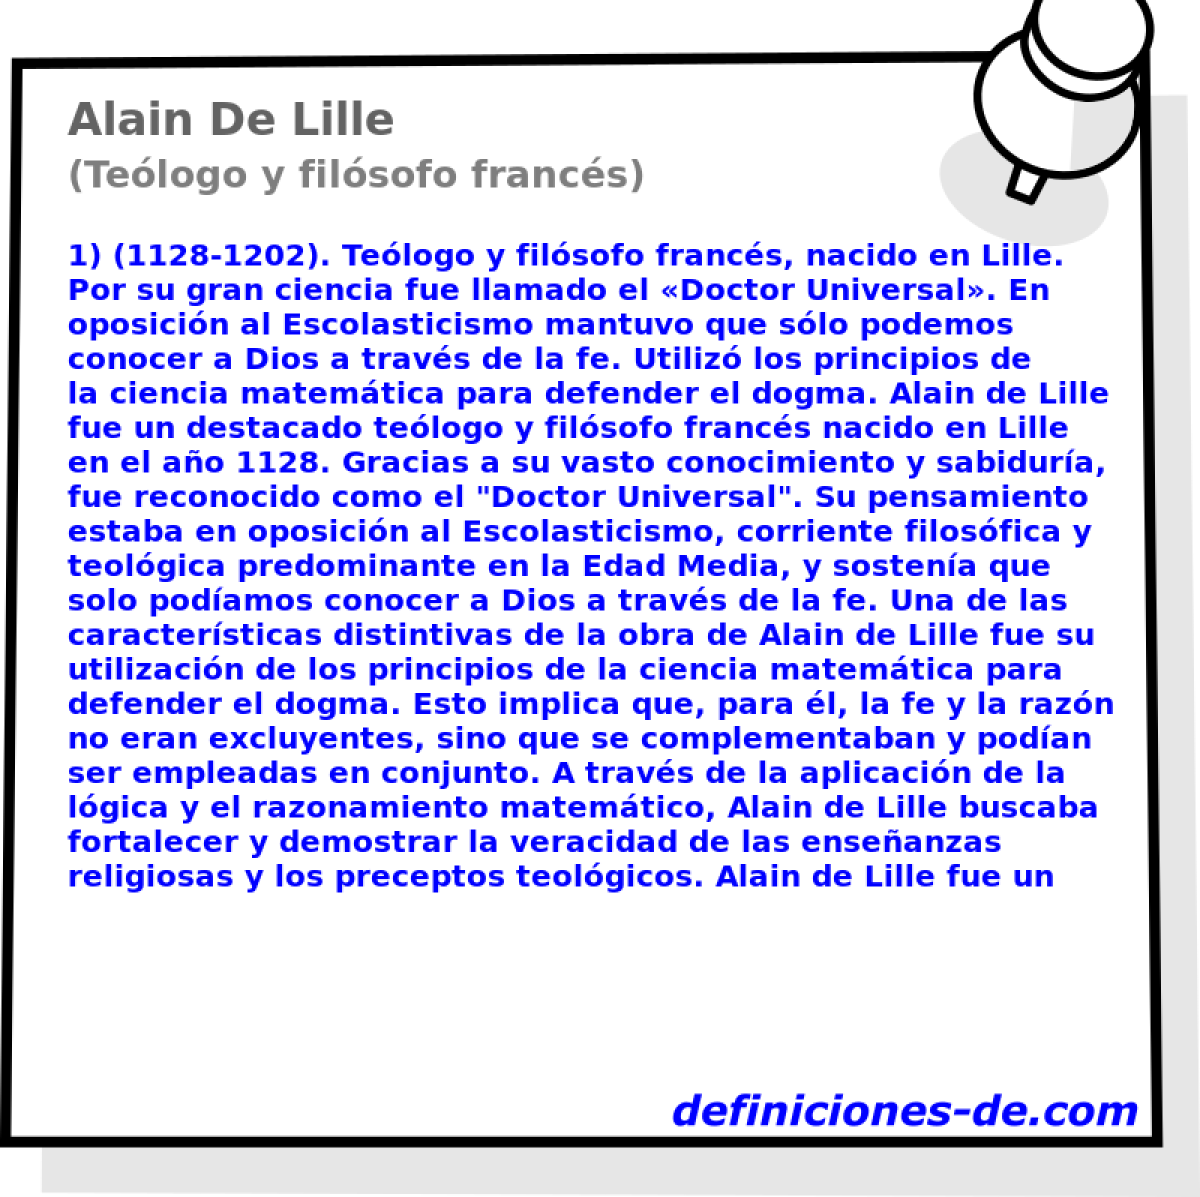 Alain De Lille (Telogo y filsofo francs)